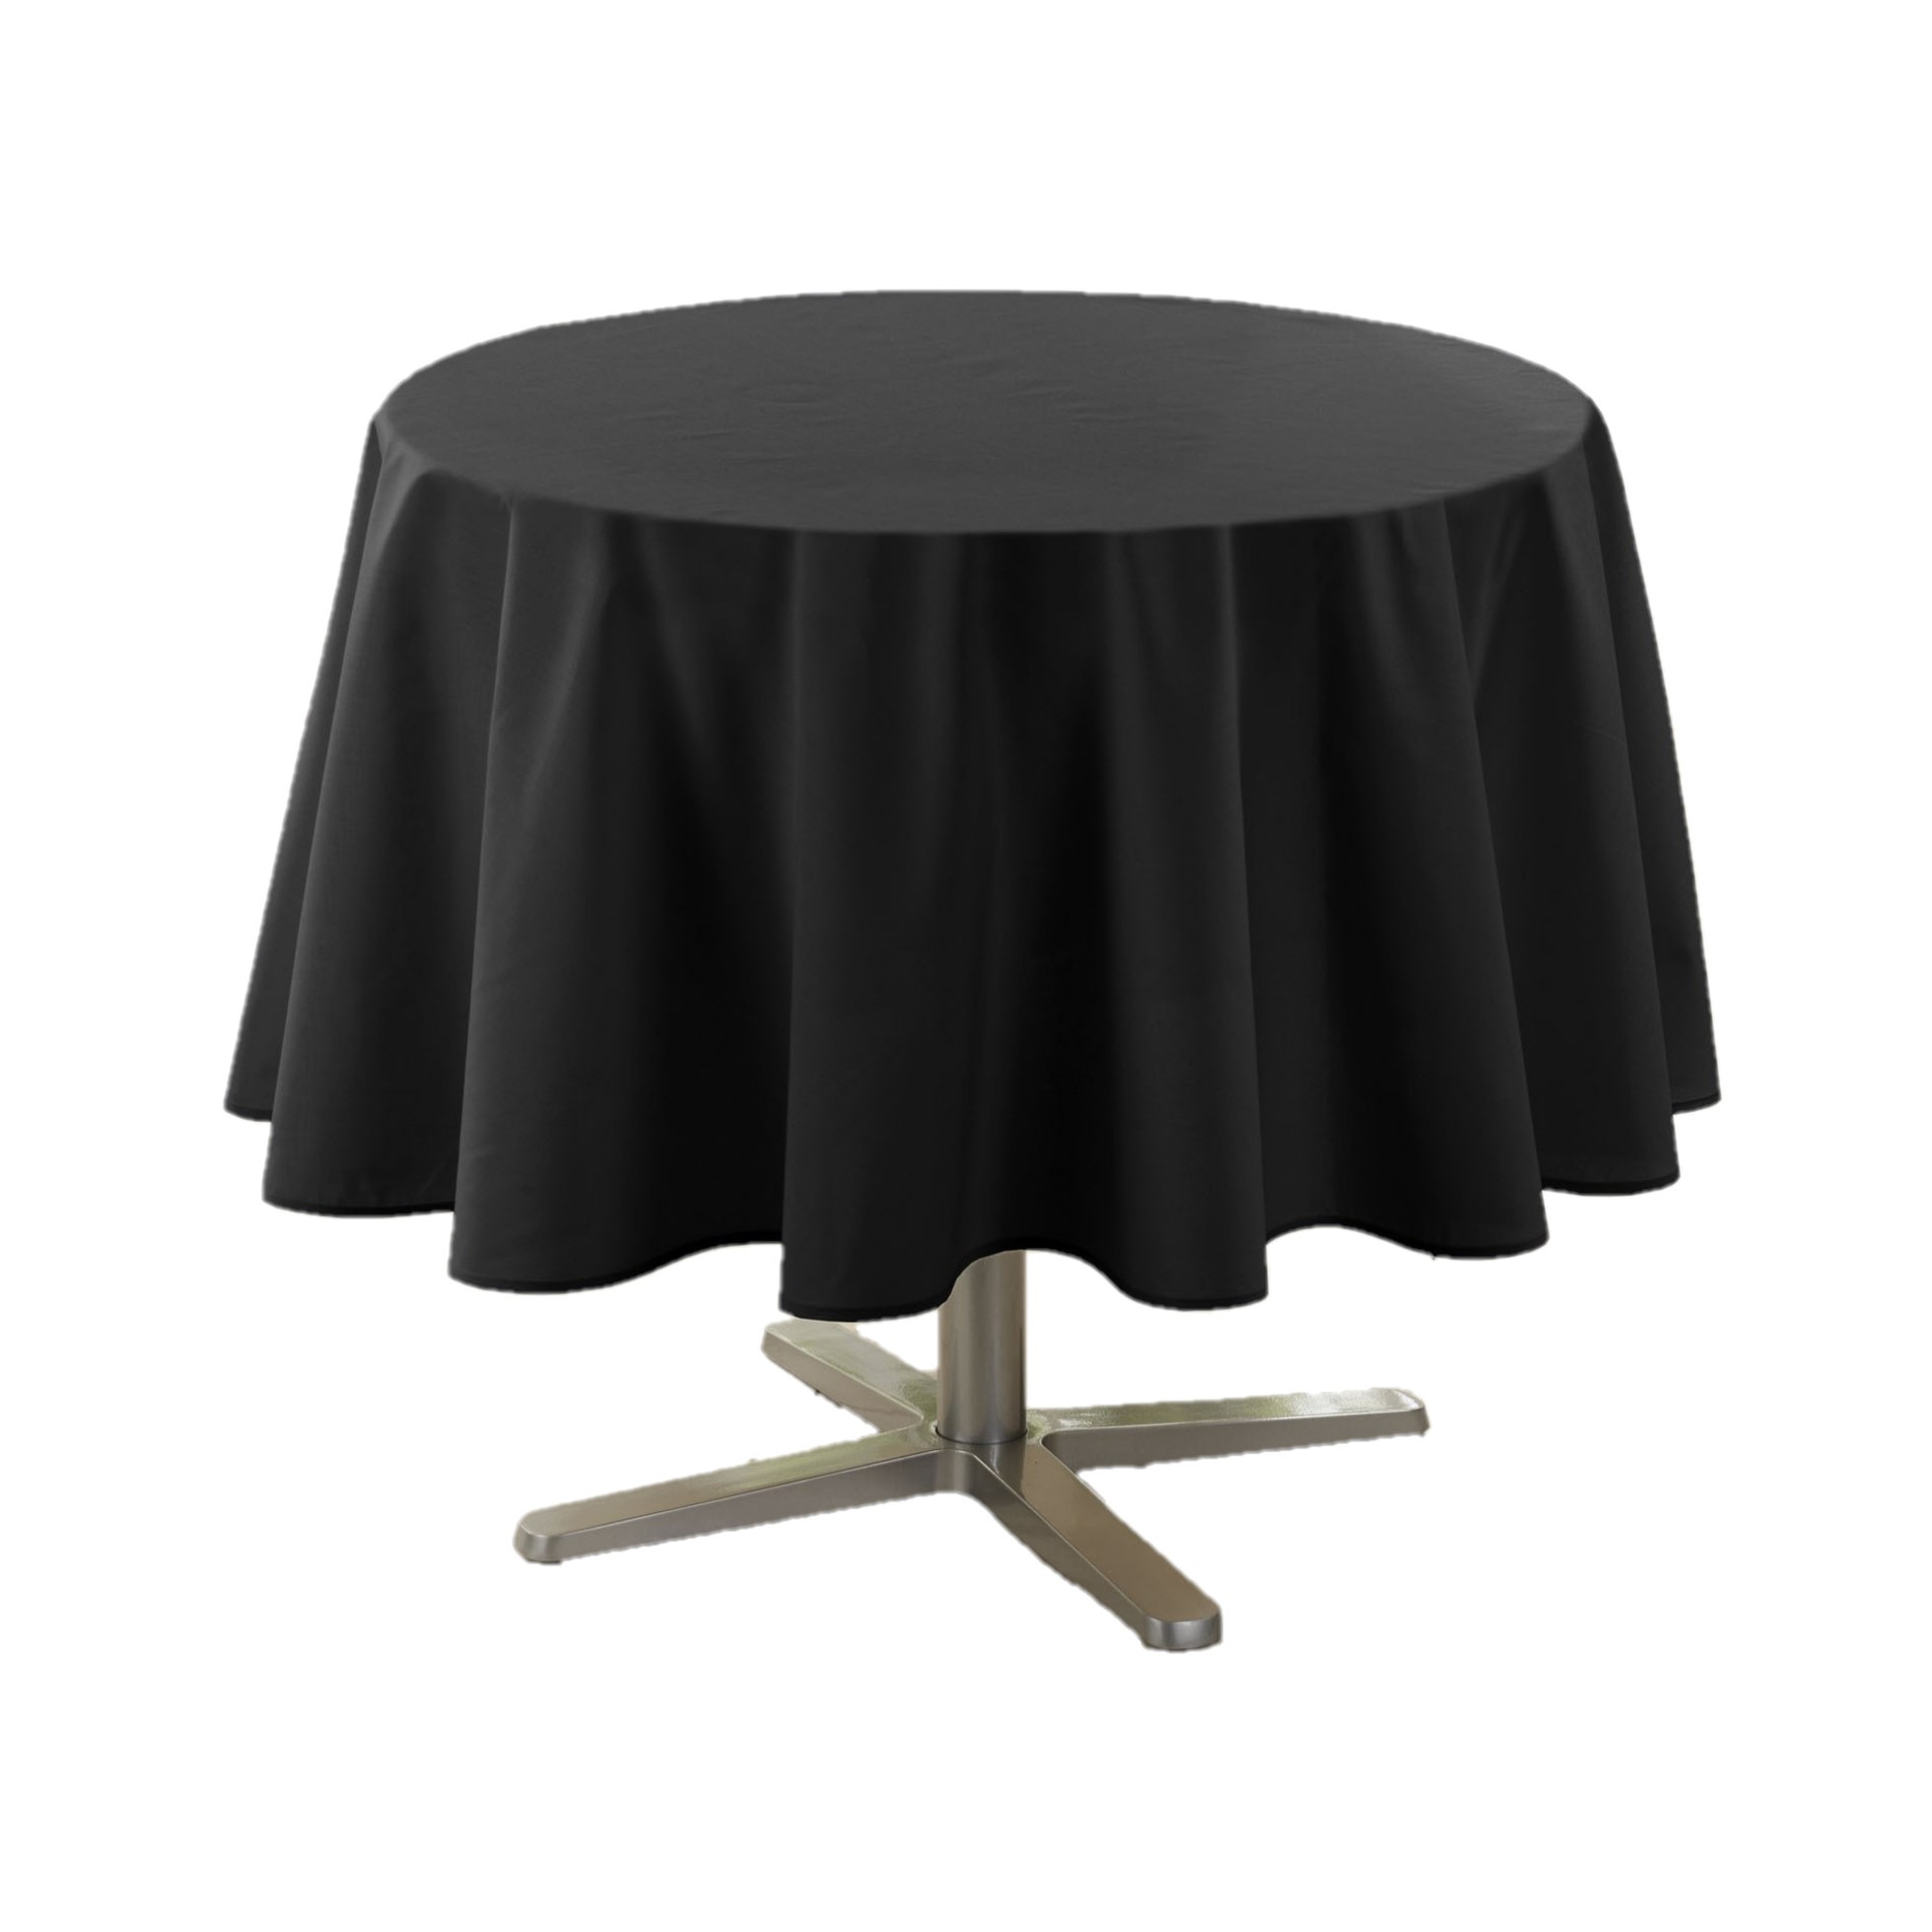 Wicotex Zwart tafelkleed van polyester rond 180 cm -